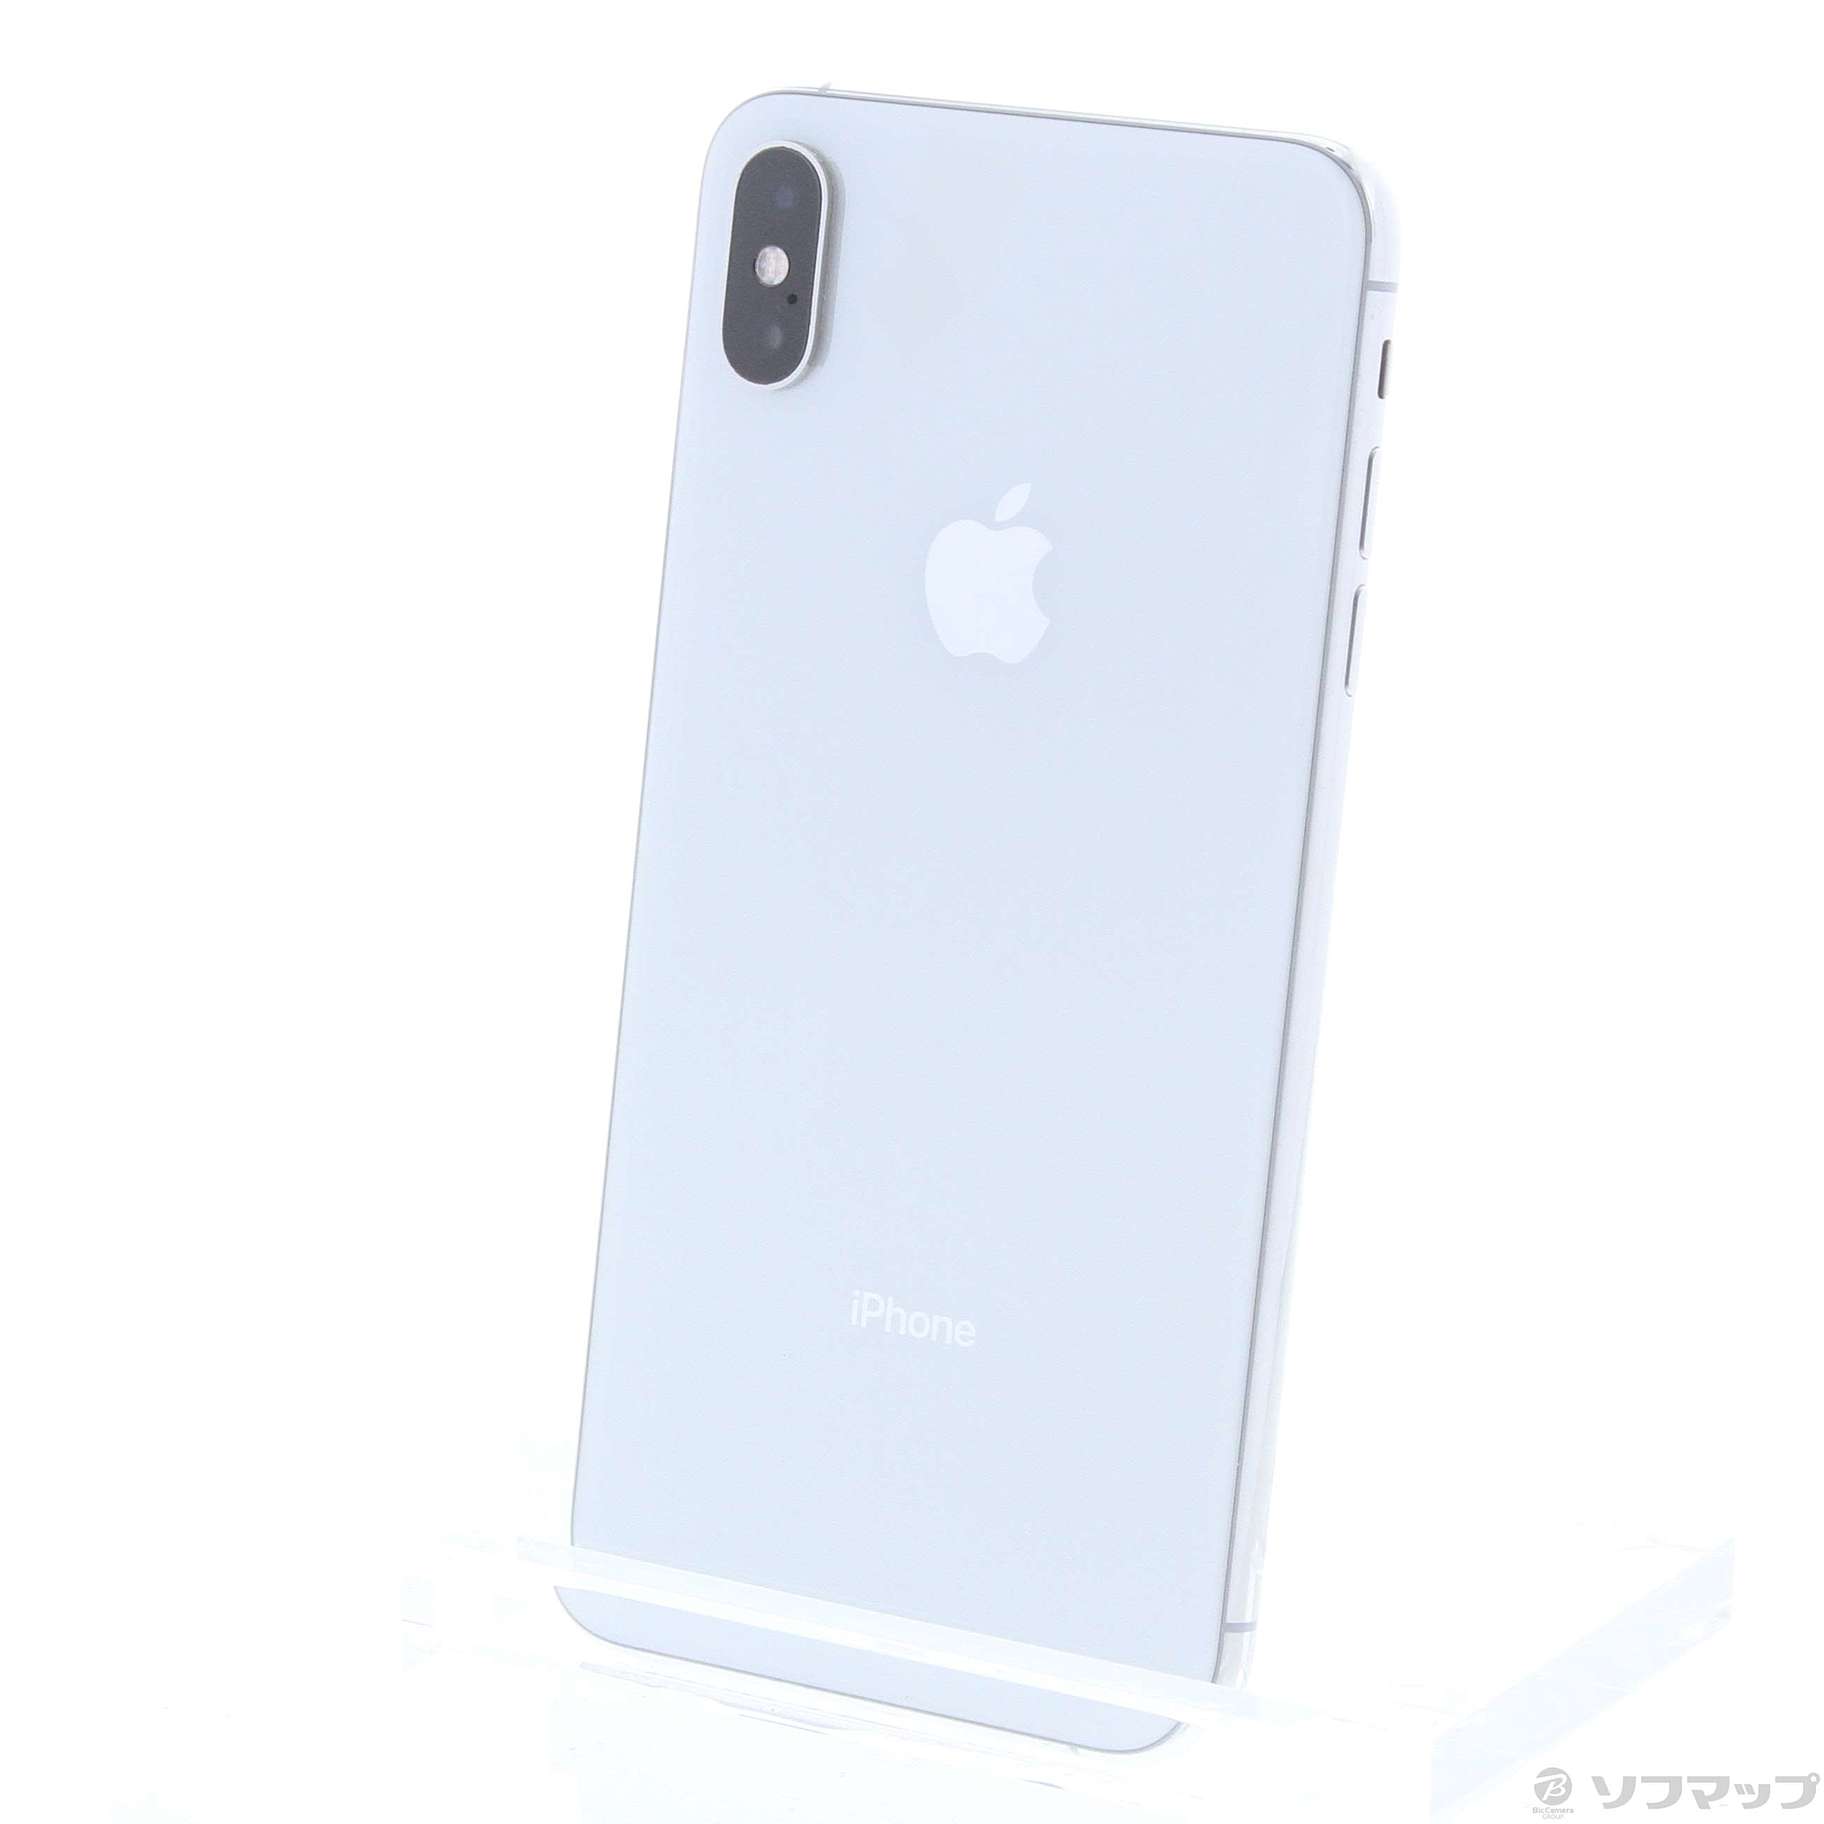 Apple iPhoneXs Max Silver 64GB SIMフリー